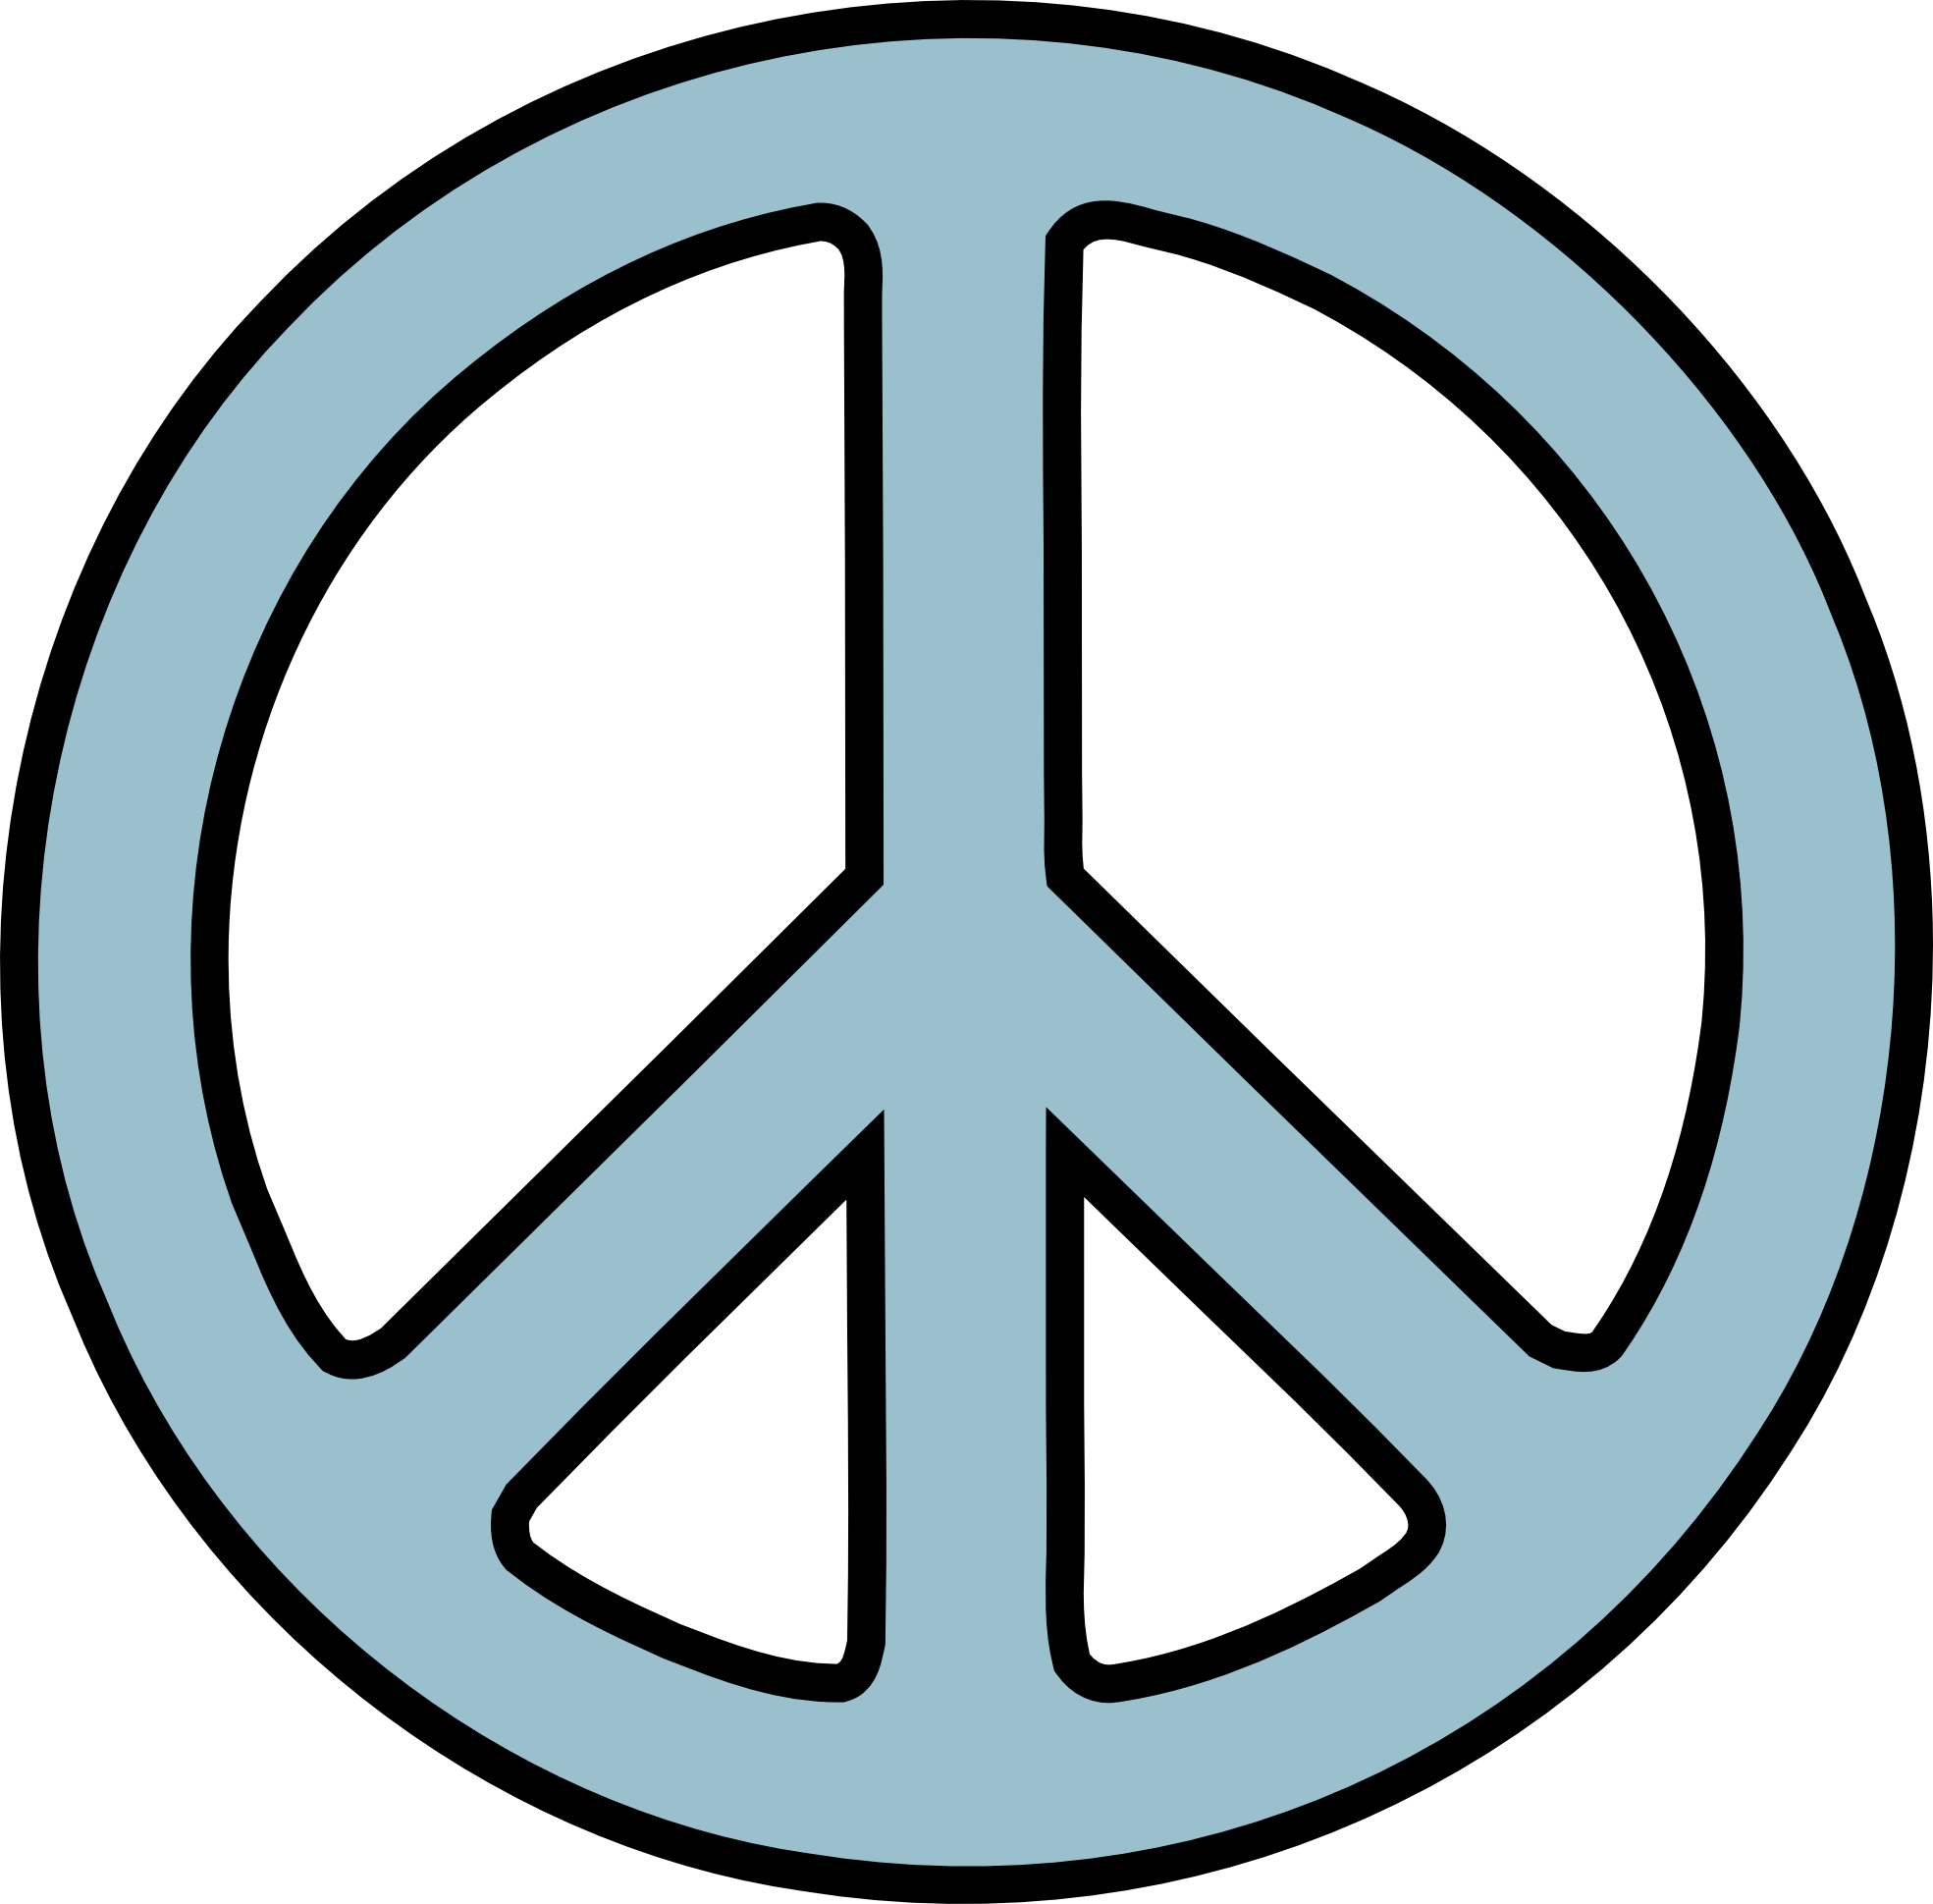 Peace signs clipart - ClipartFox